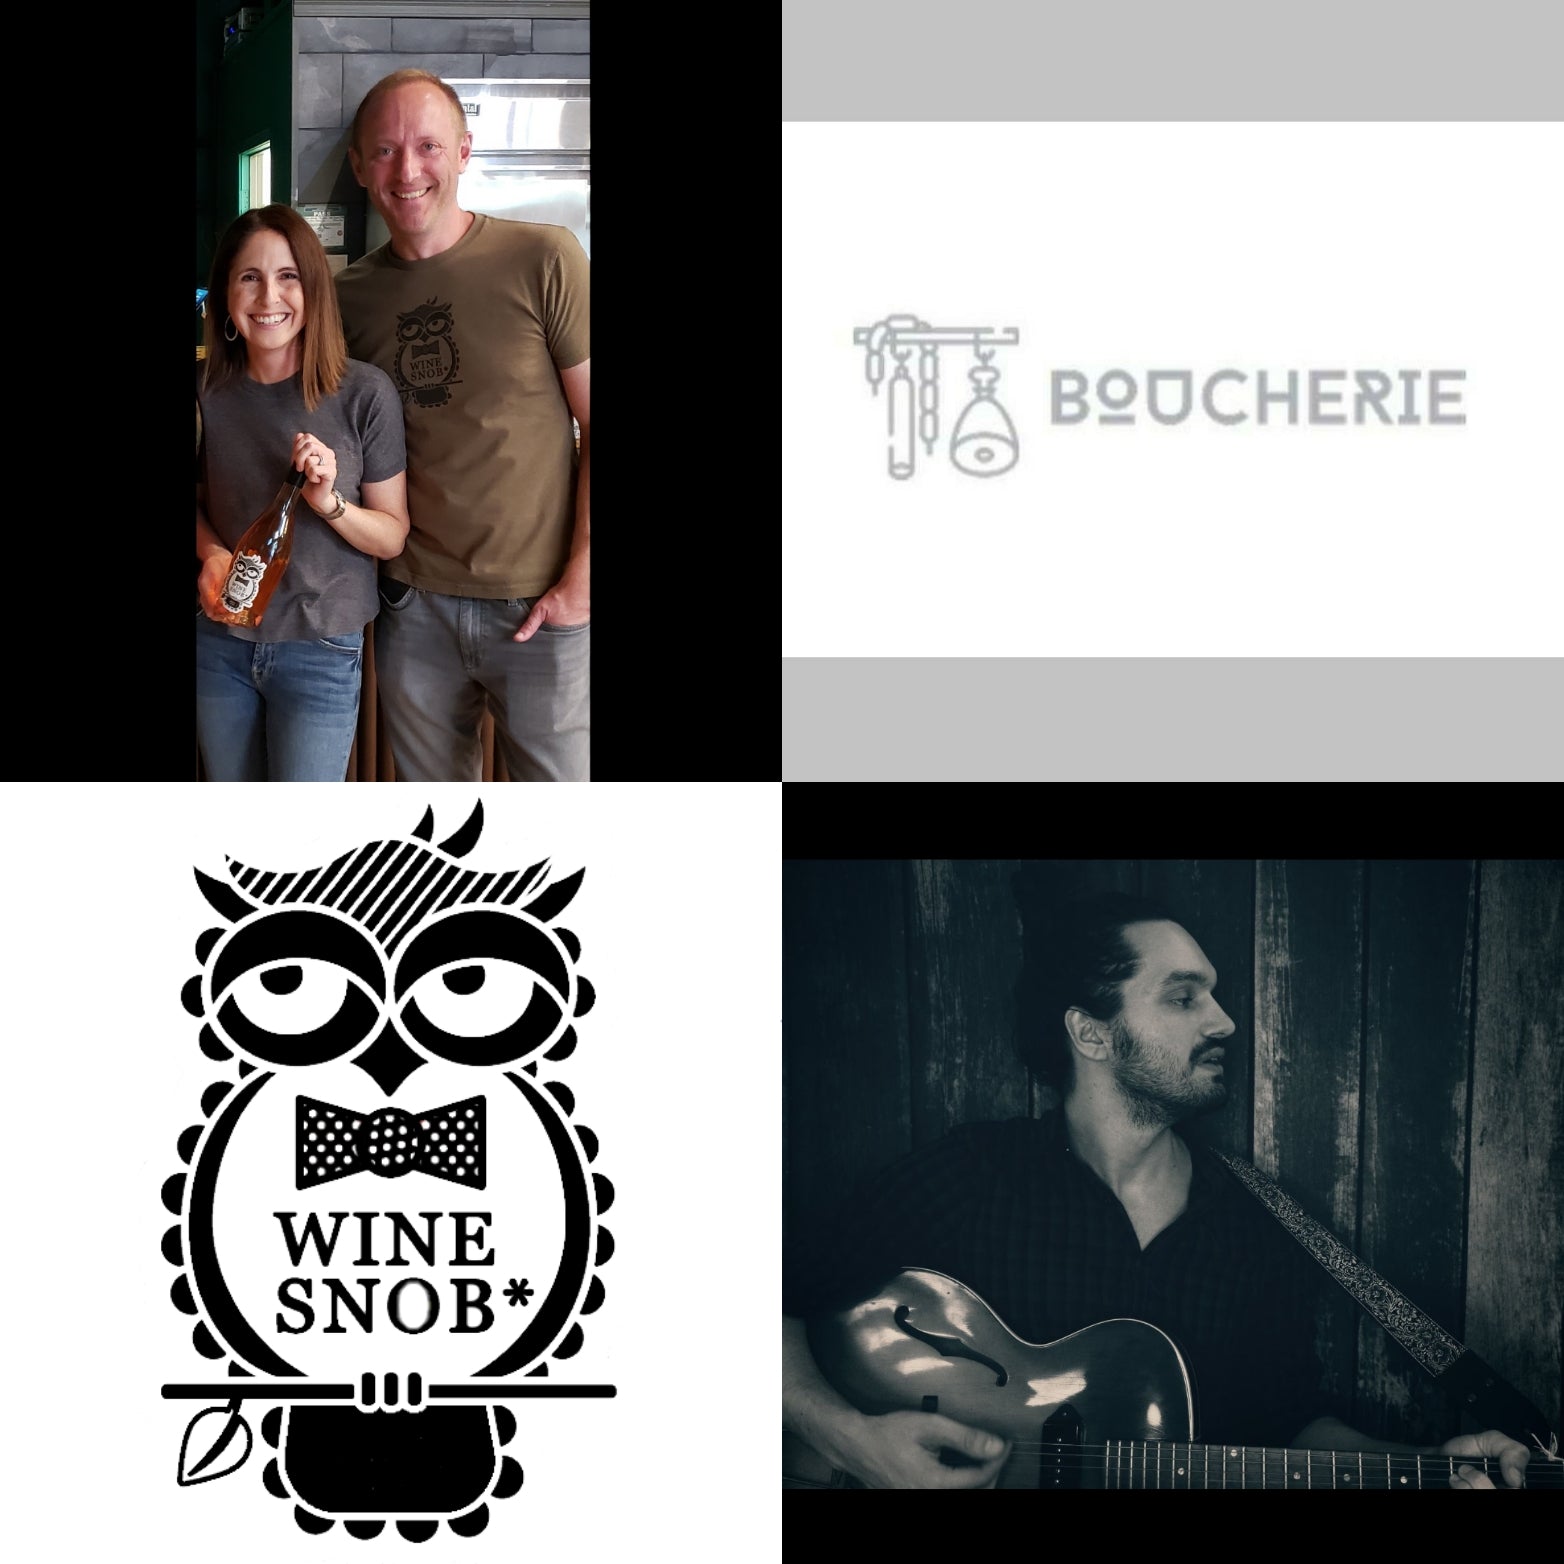 John Vicino + Boucherie Food Truck at Wine Snob*